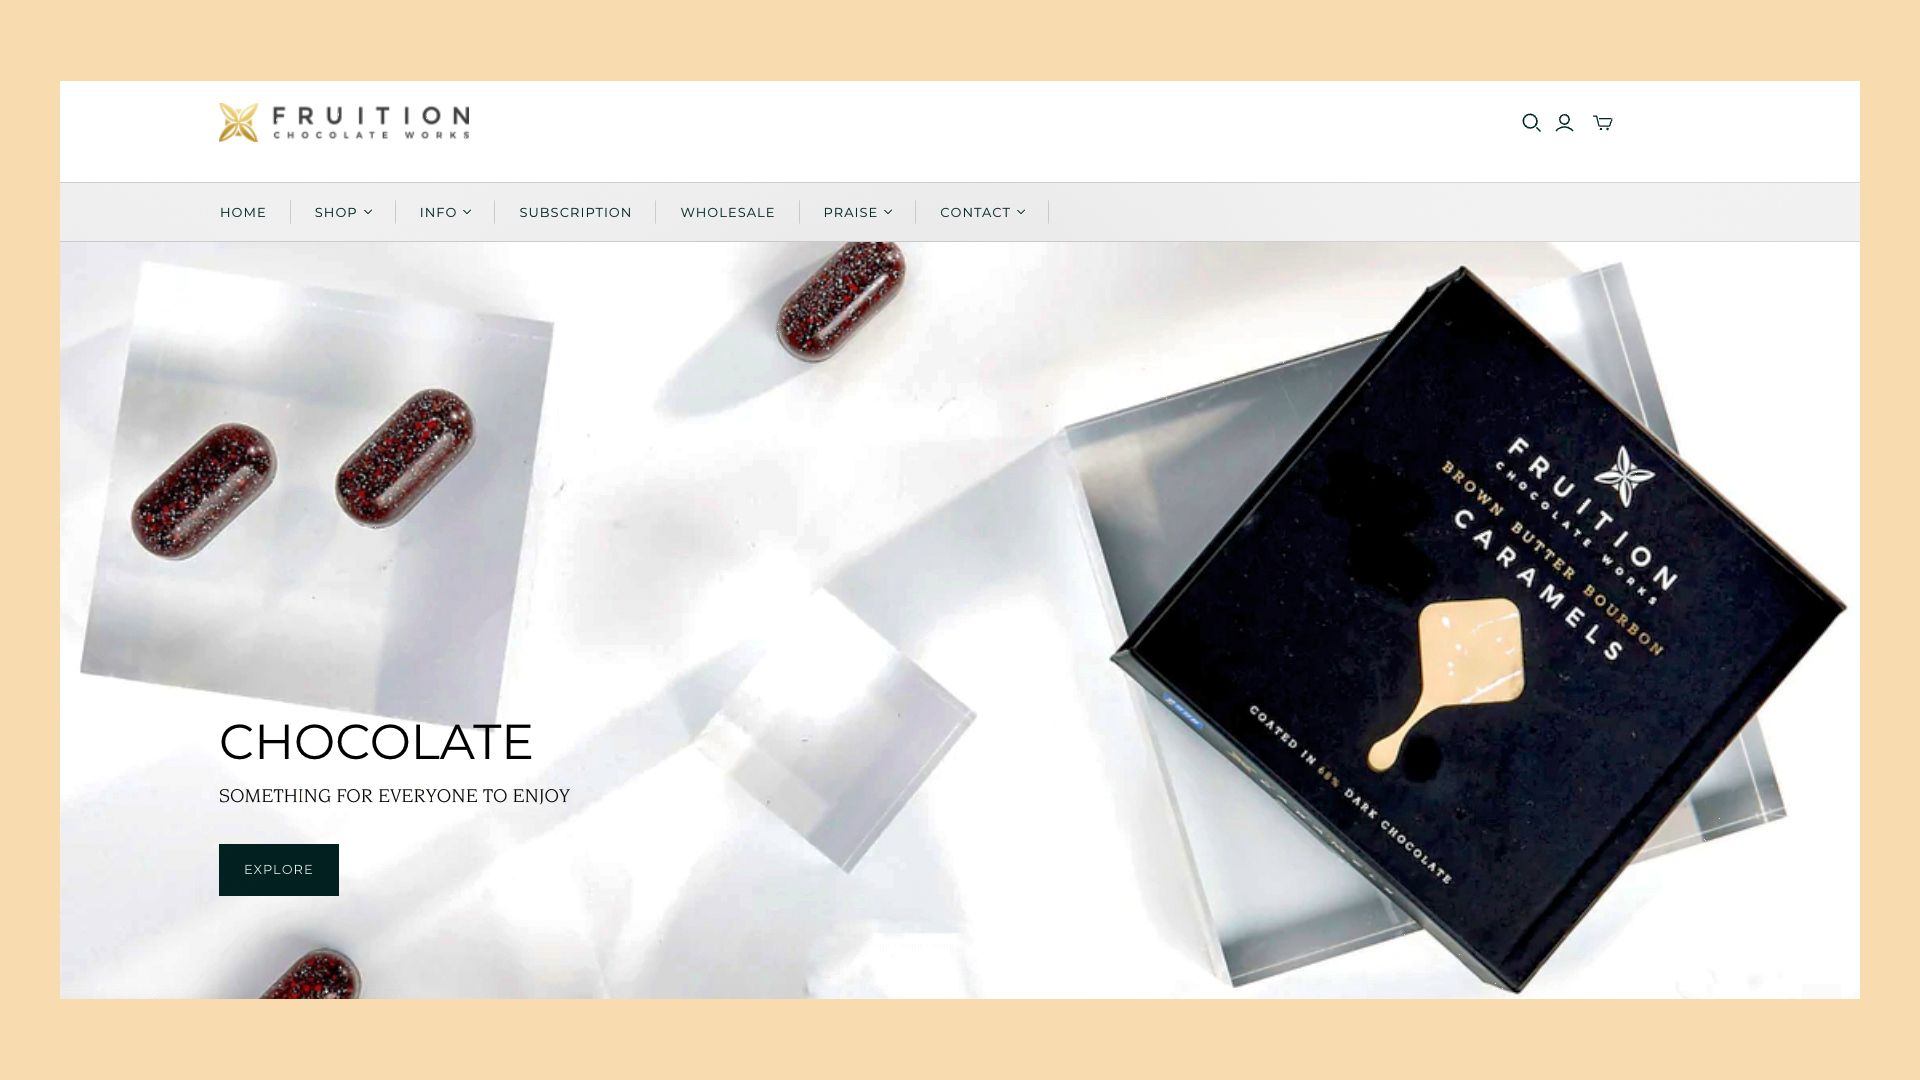 TheChocolateLife::LIVE – Bryan Graham / Fruition Chocolate Works